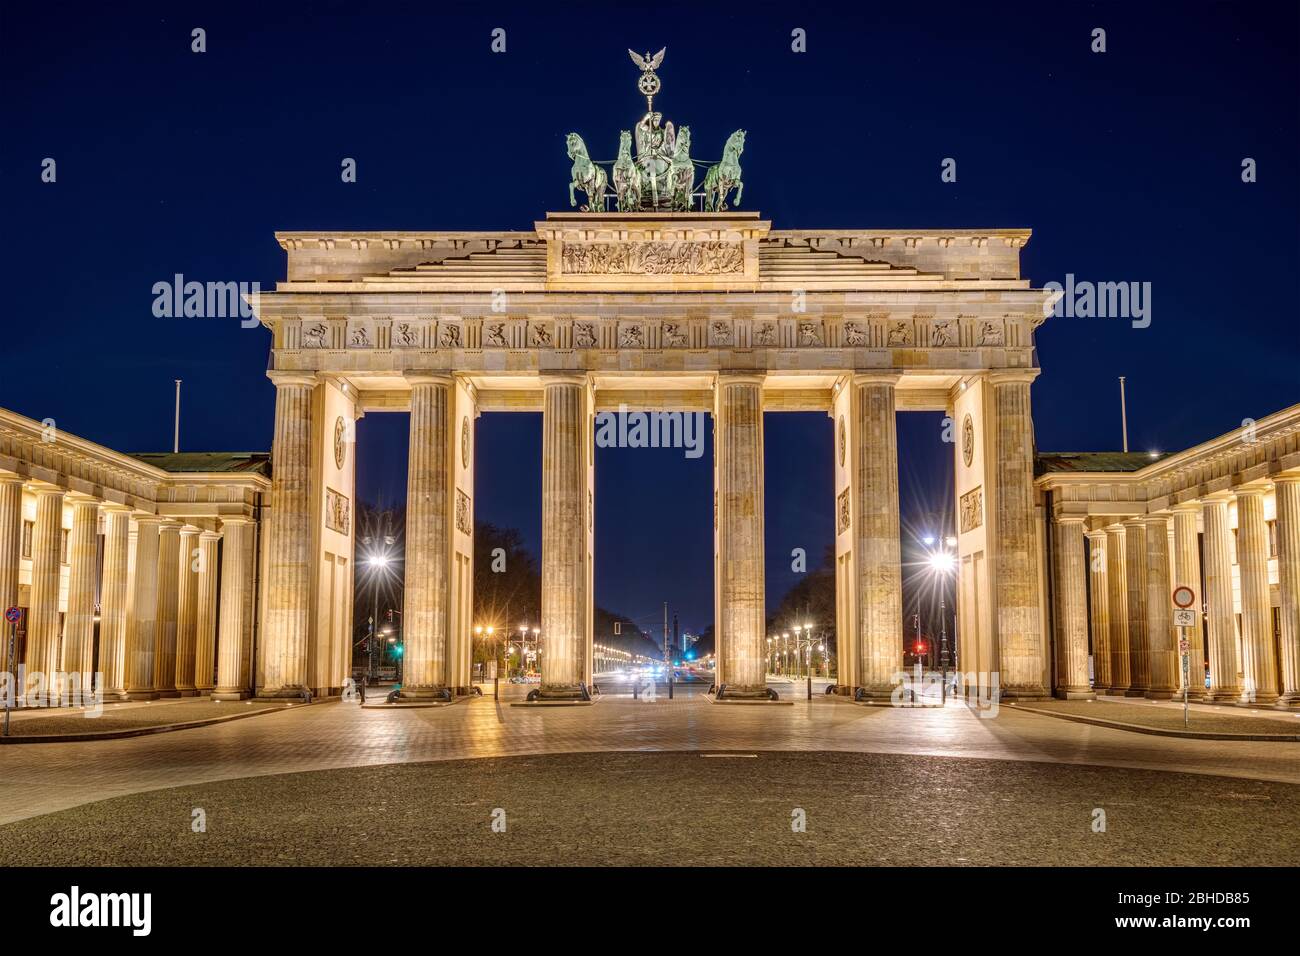 The famous illuminated Brandenburg Gate in Berlin at night Stock Photo